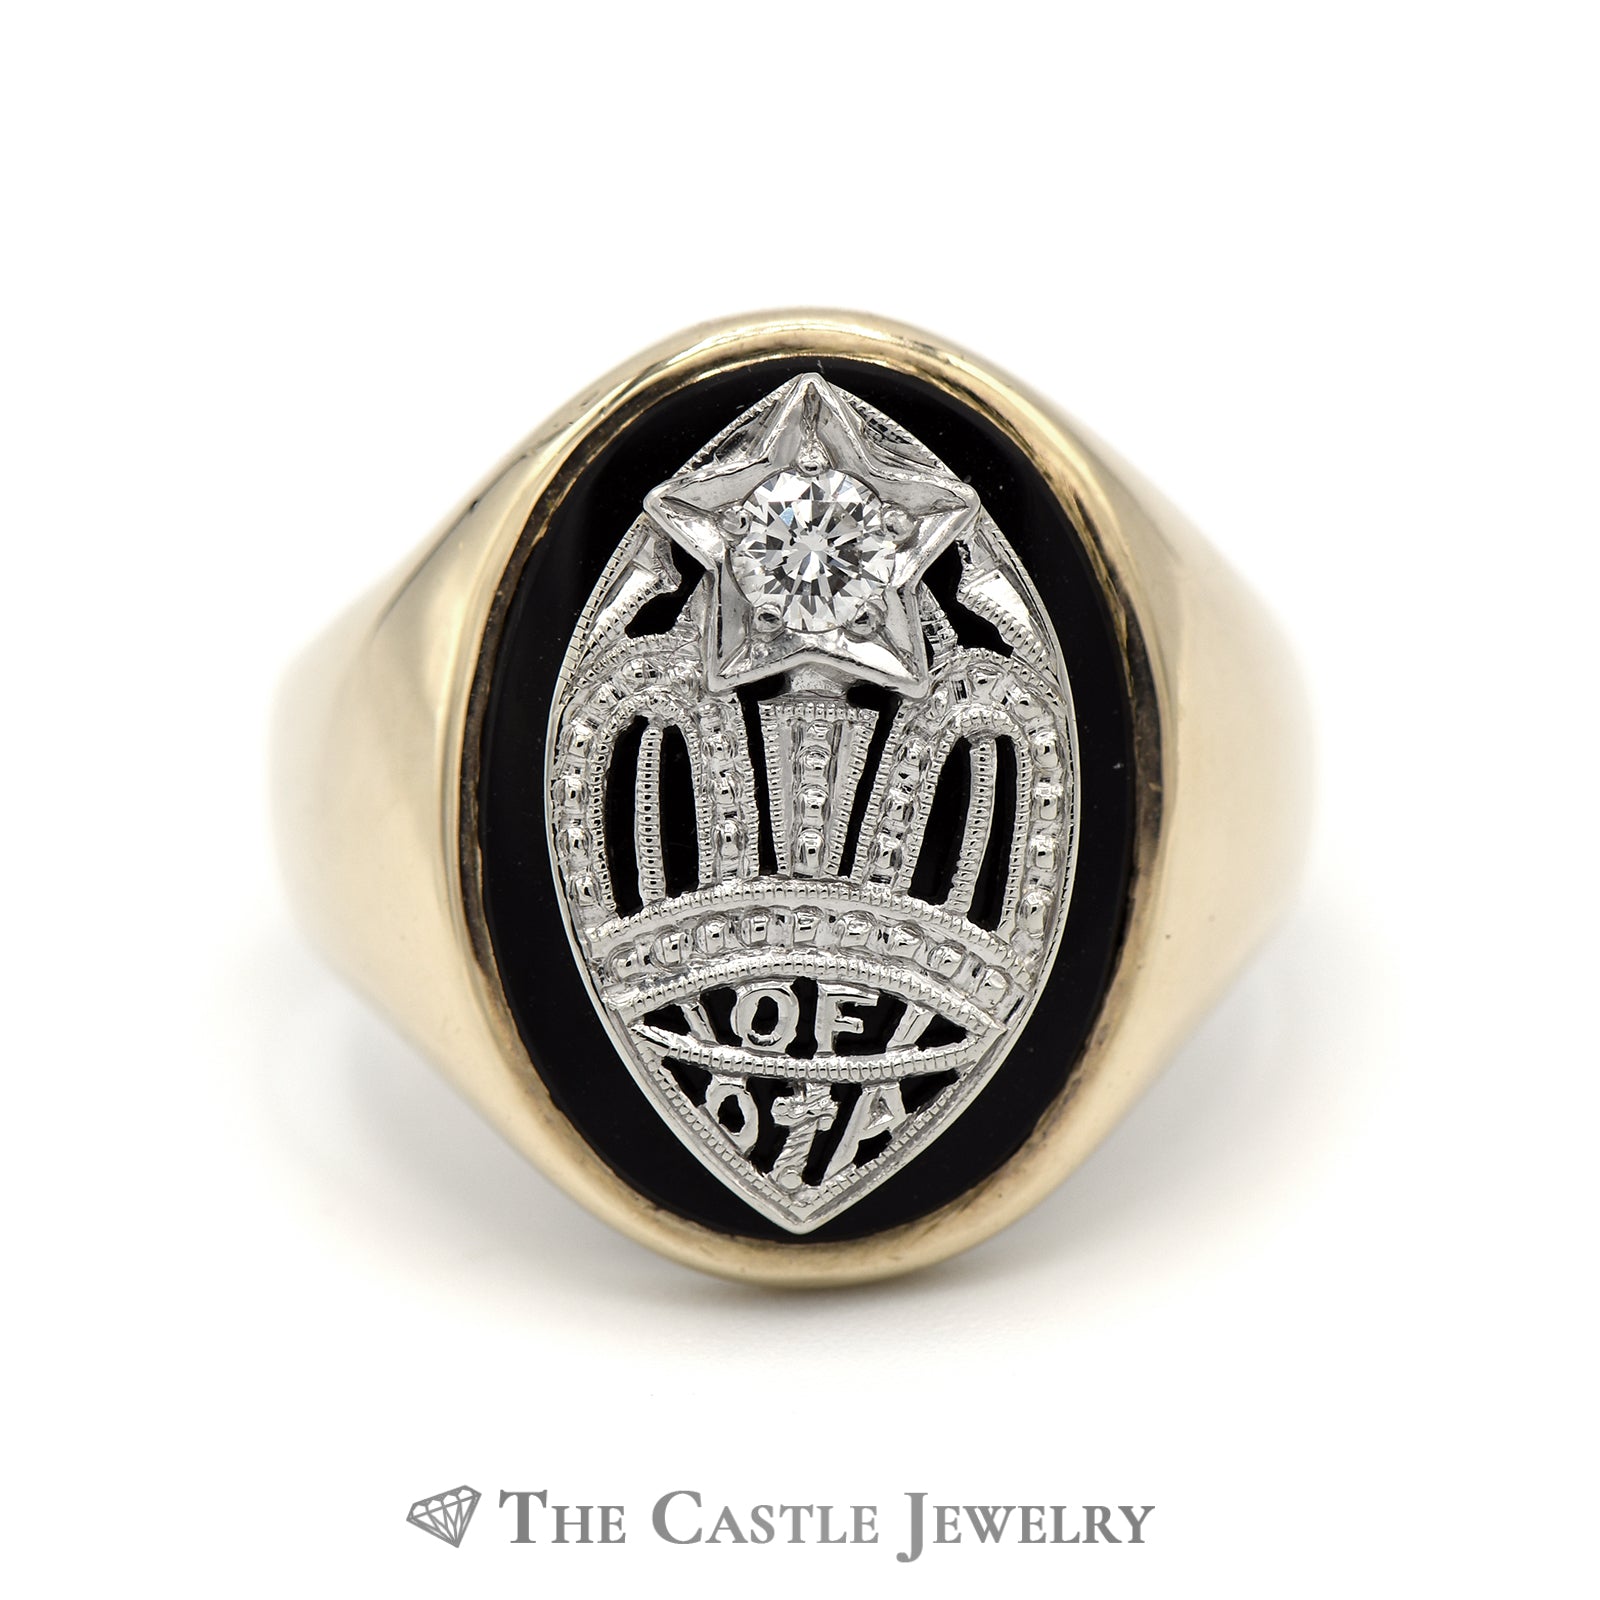 Finest 9 carat White Gold 10pt Diamond Masonic Ring AT/9R555 : Amazon.co.uk